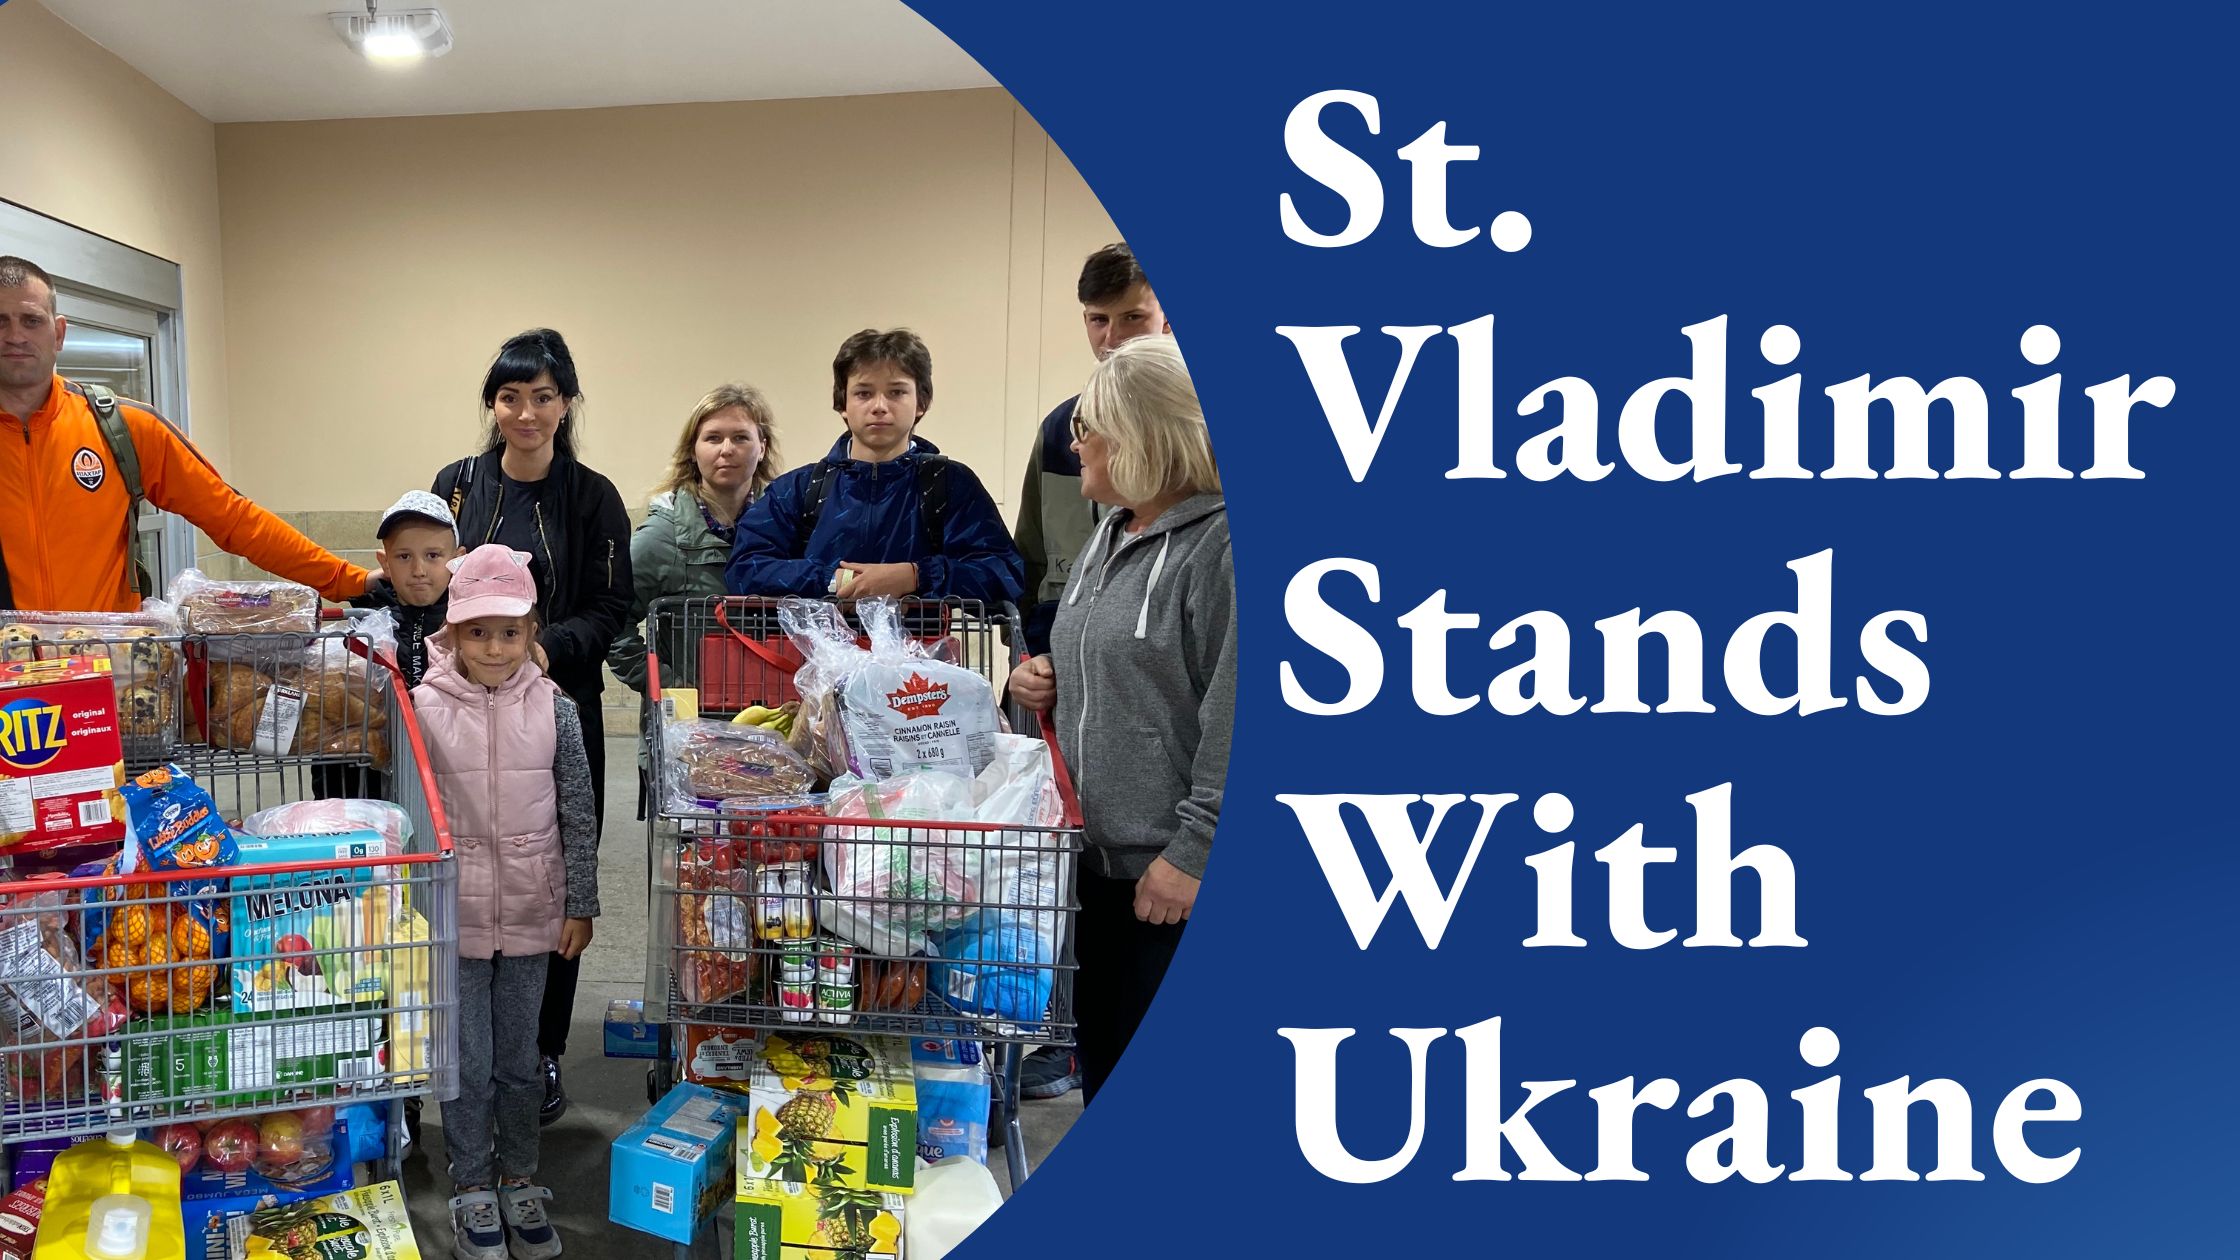 St. Vladimir Stands With Ukraine